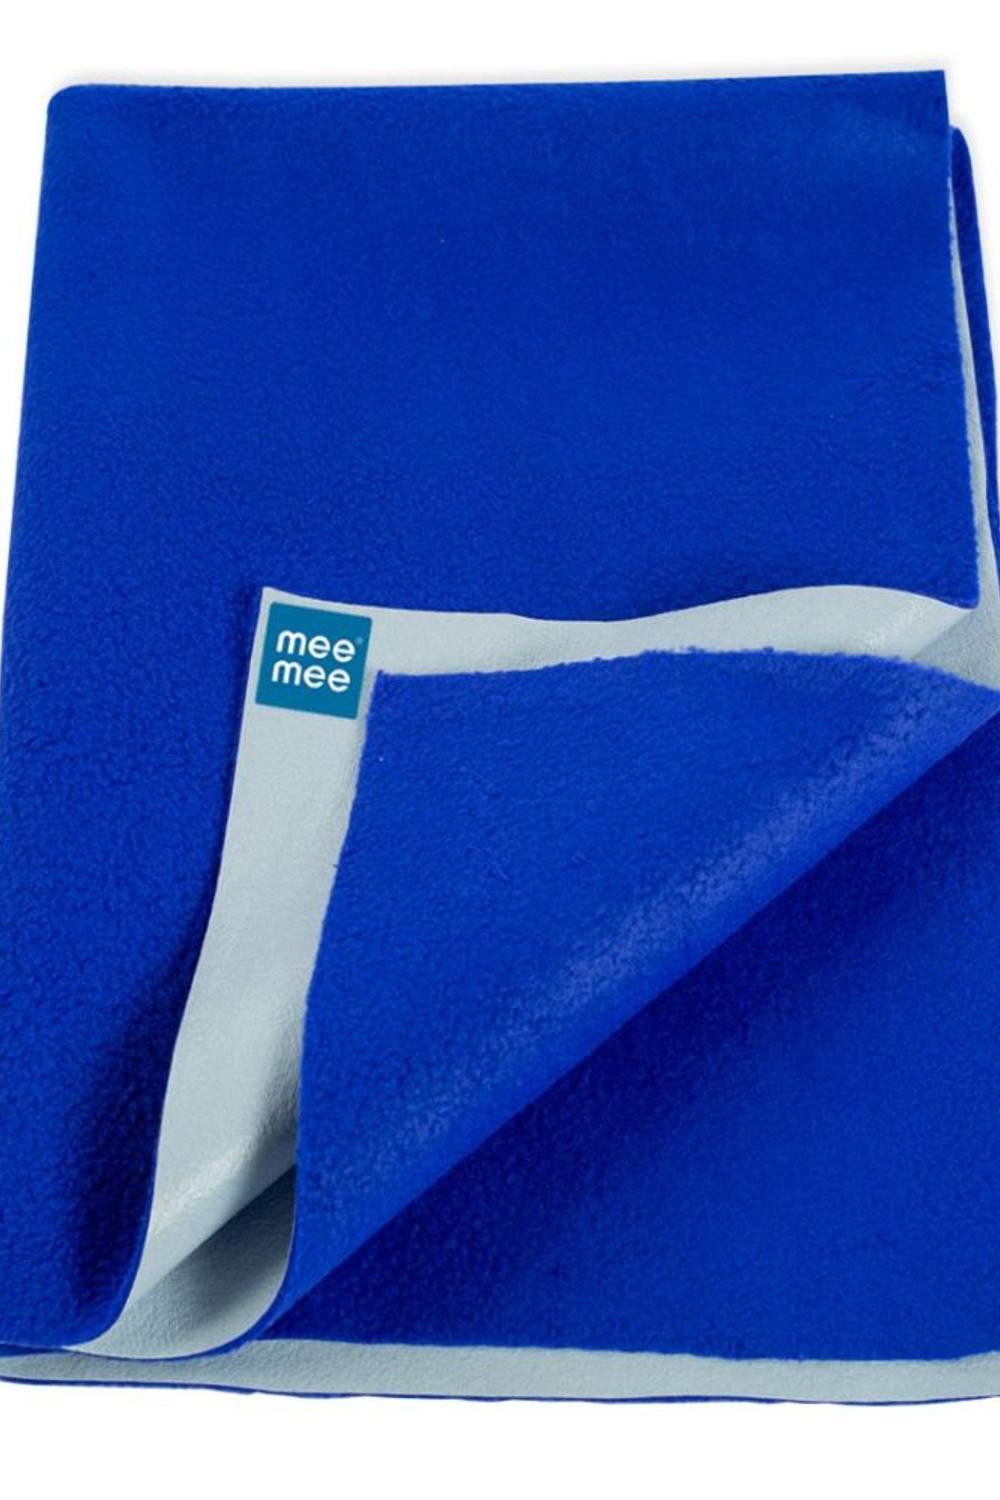 Mee Mee Royal Blue Water Proof Total Dry Sheet Protector Mat (Medium)